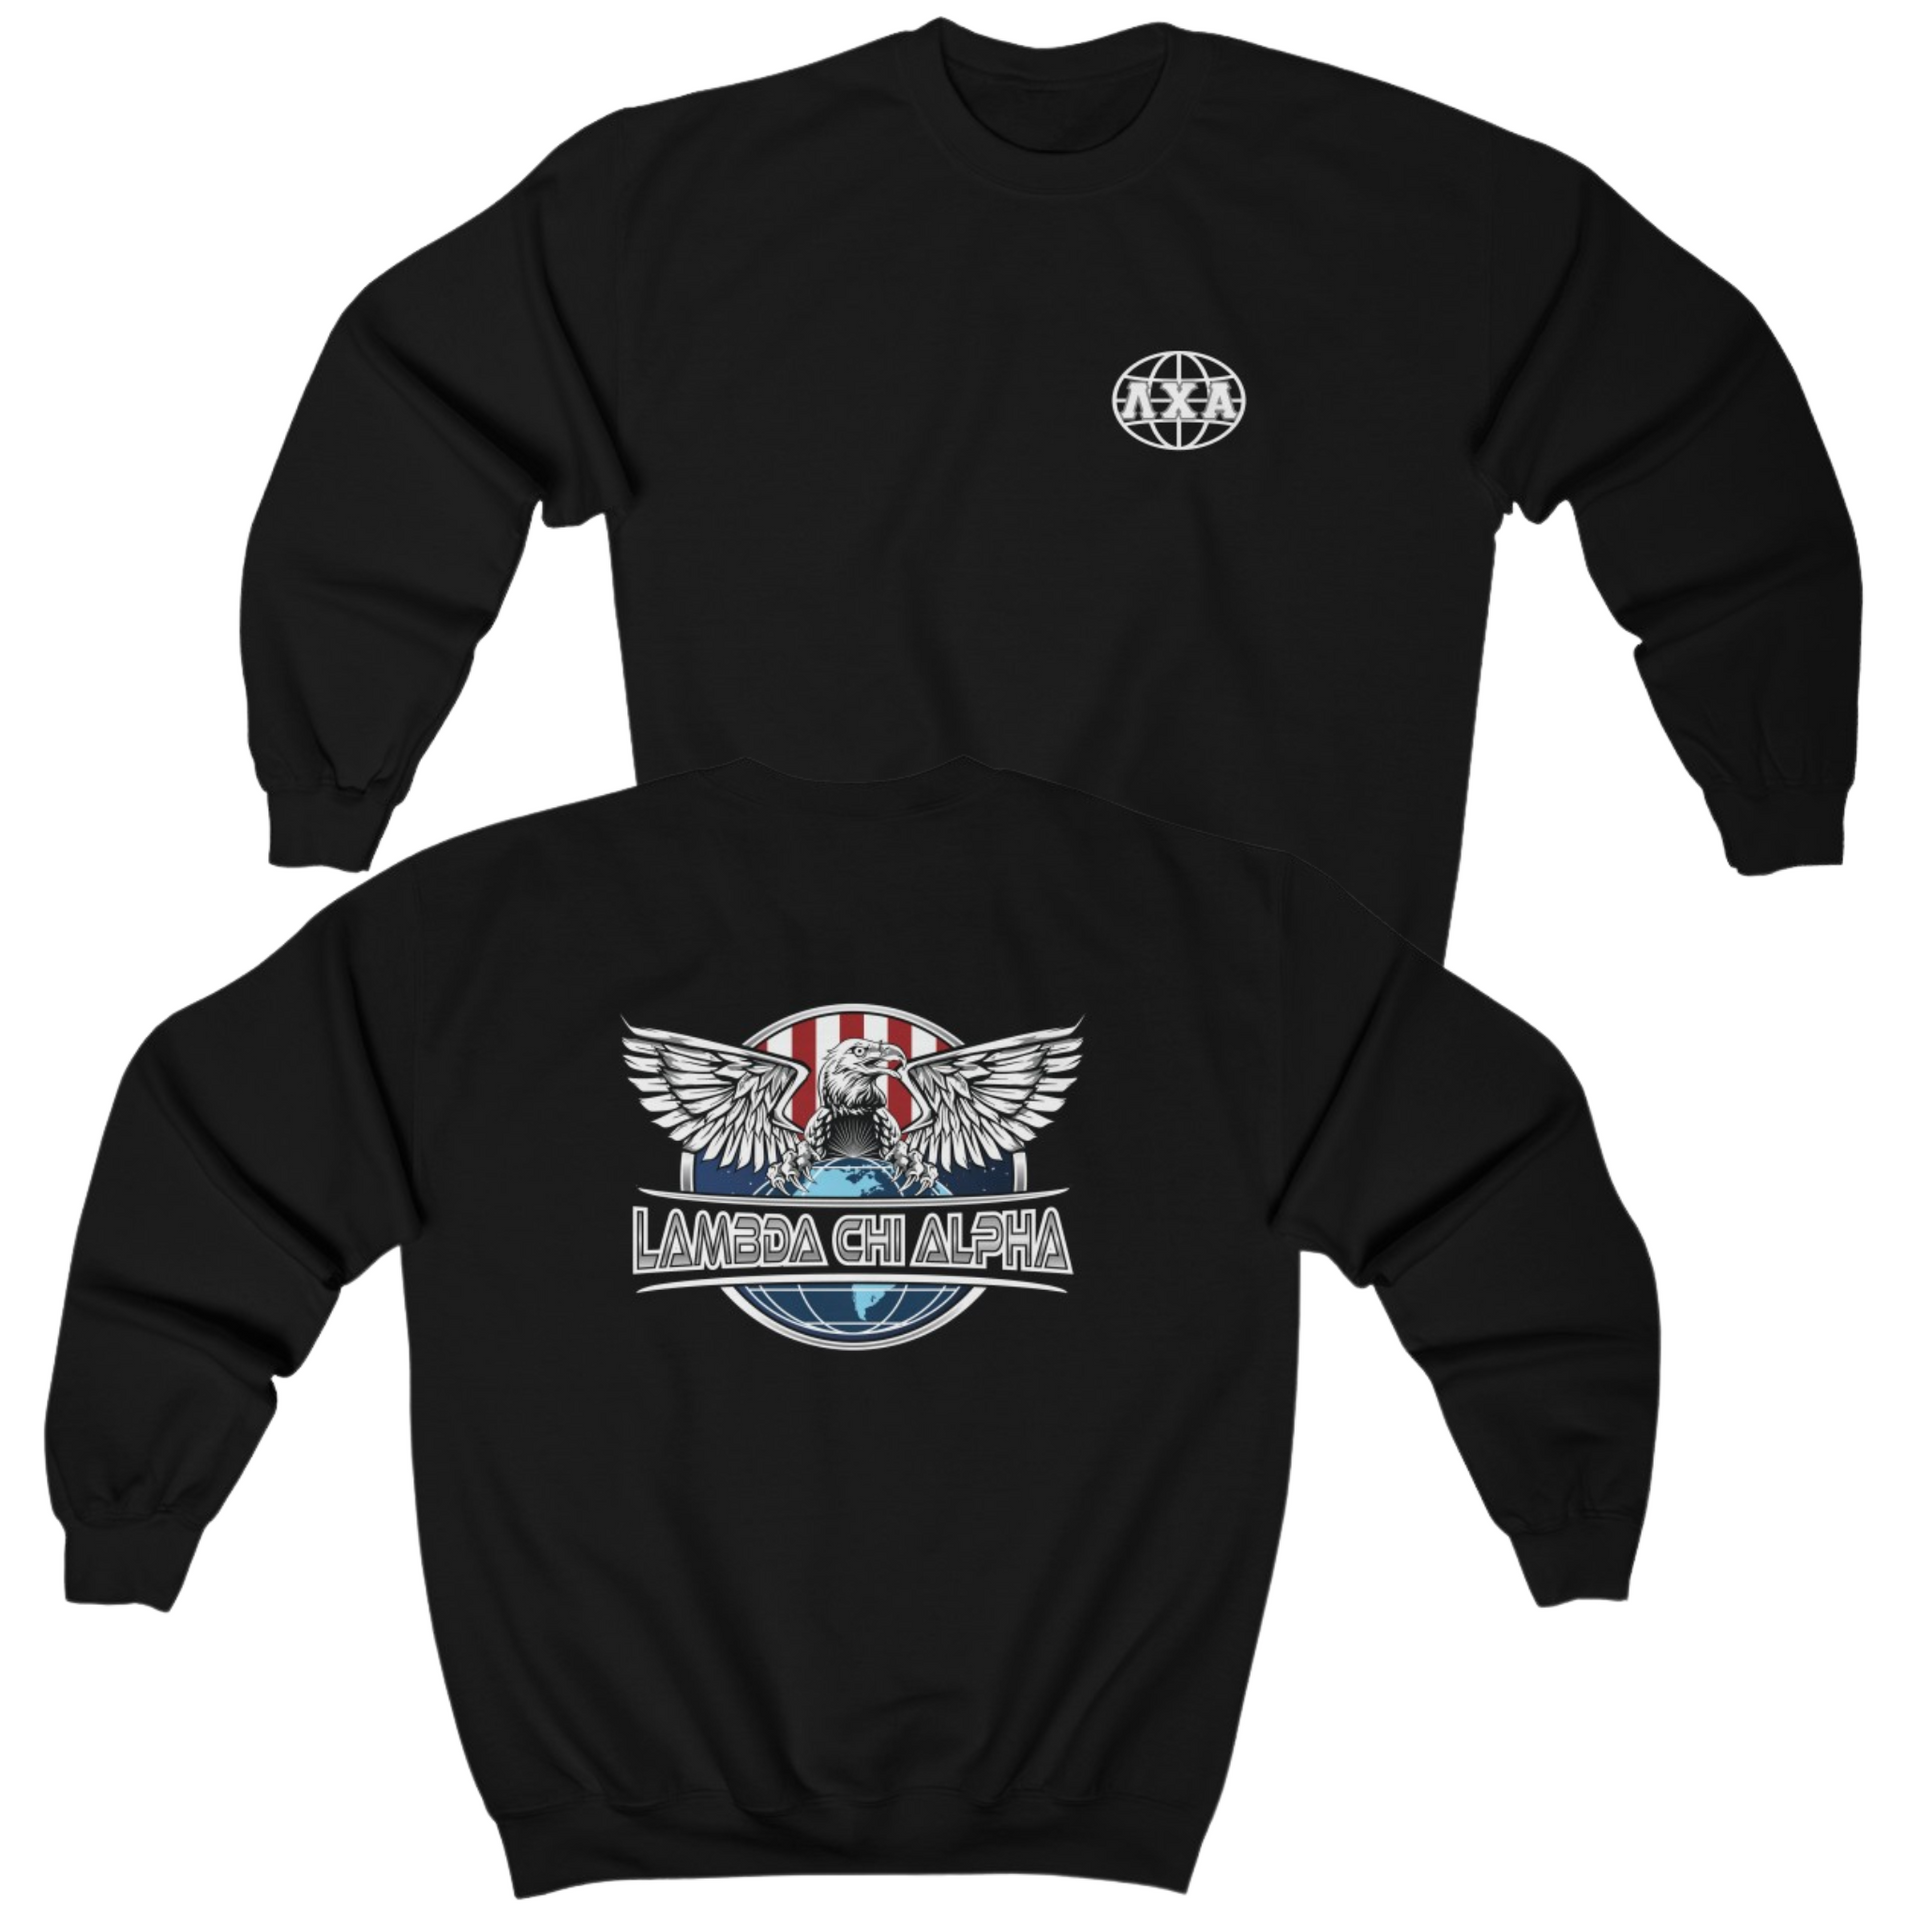 Black Lambda Chi Alpha Graphic Crewneck Sweatshirt | The Fraternal Order | Lambda Chi Alpha Fraternity Shirt